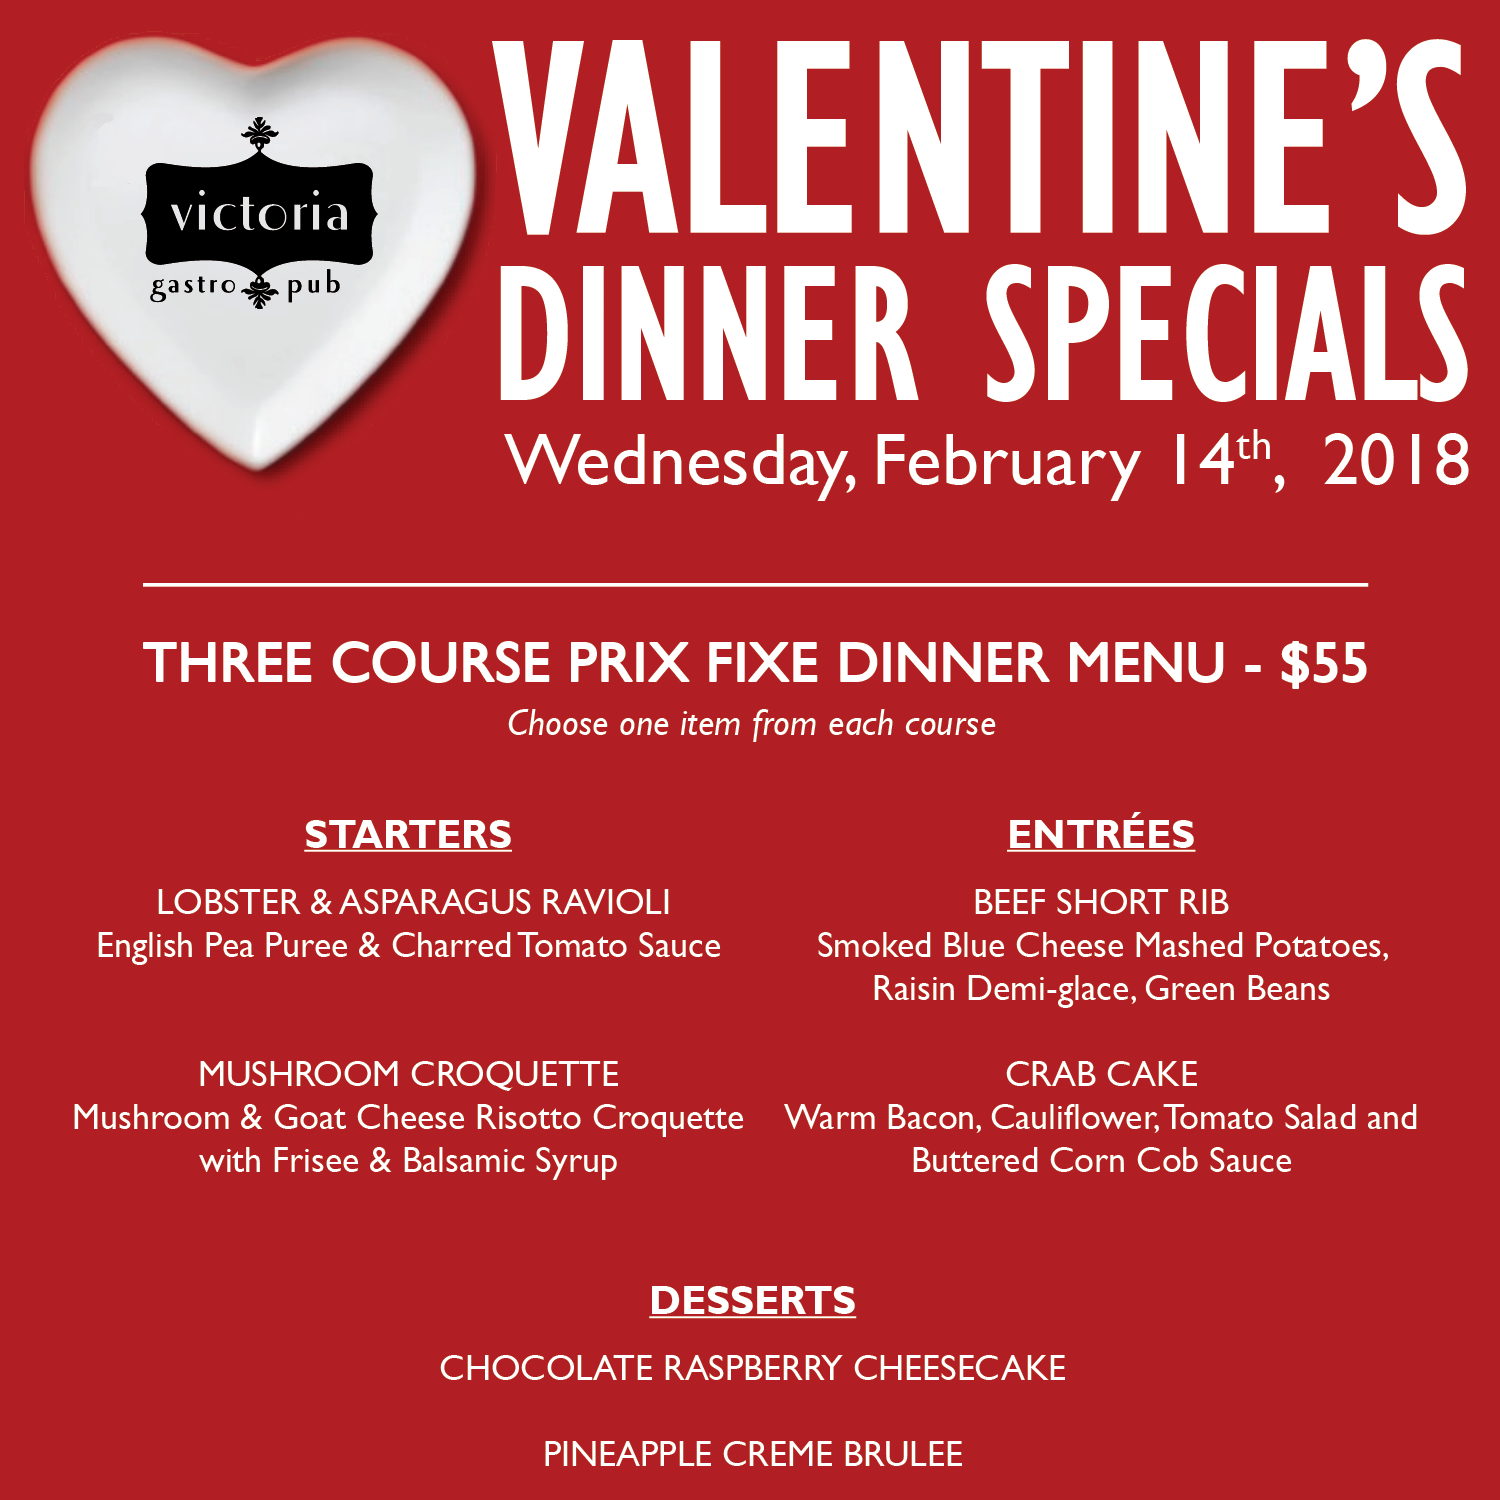 Valentine's Dinner Specials - Victoria Gastro Pub